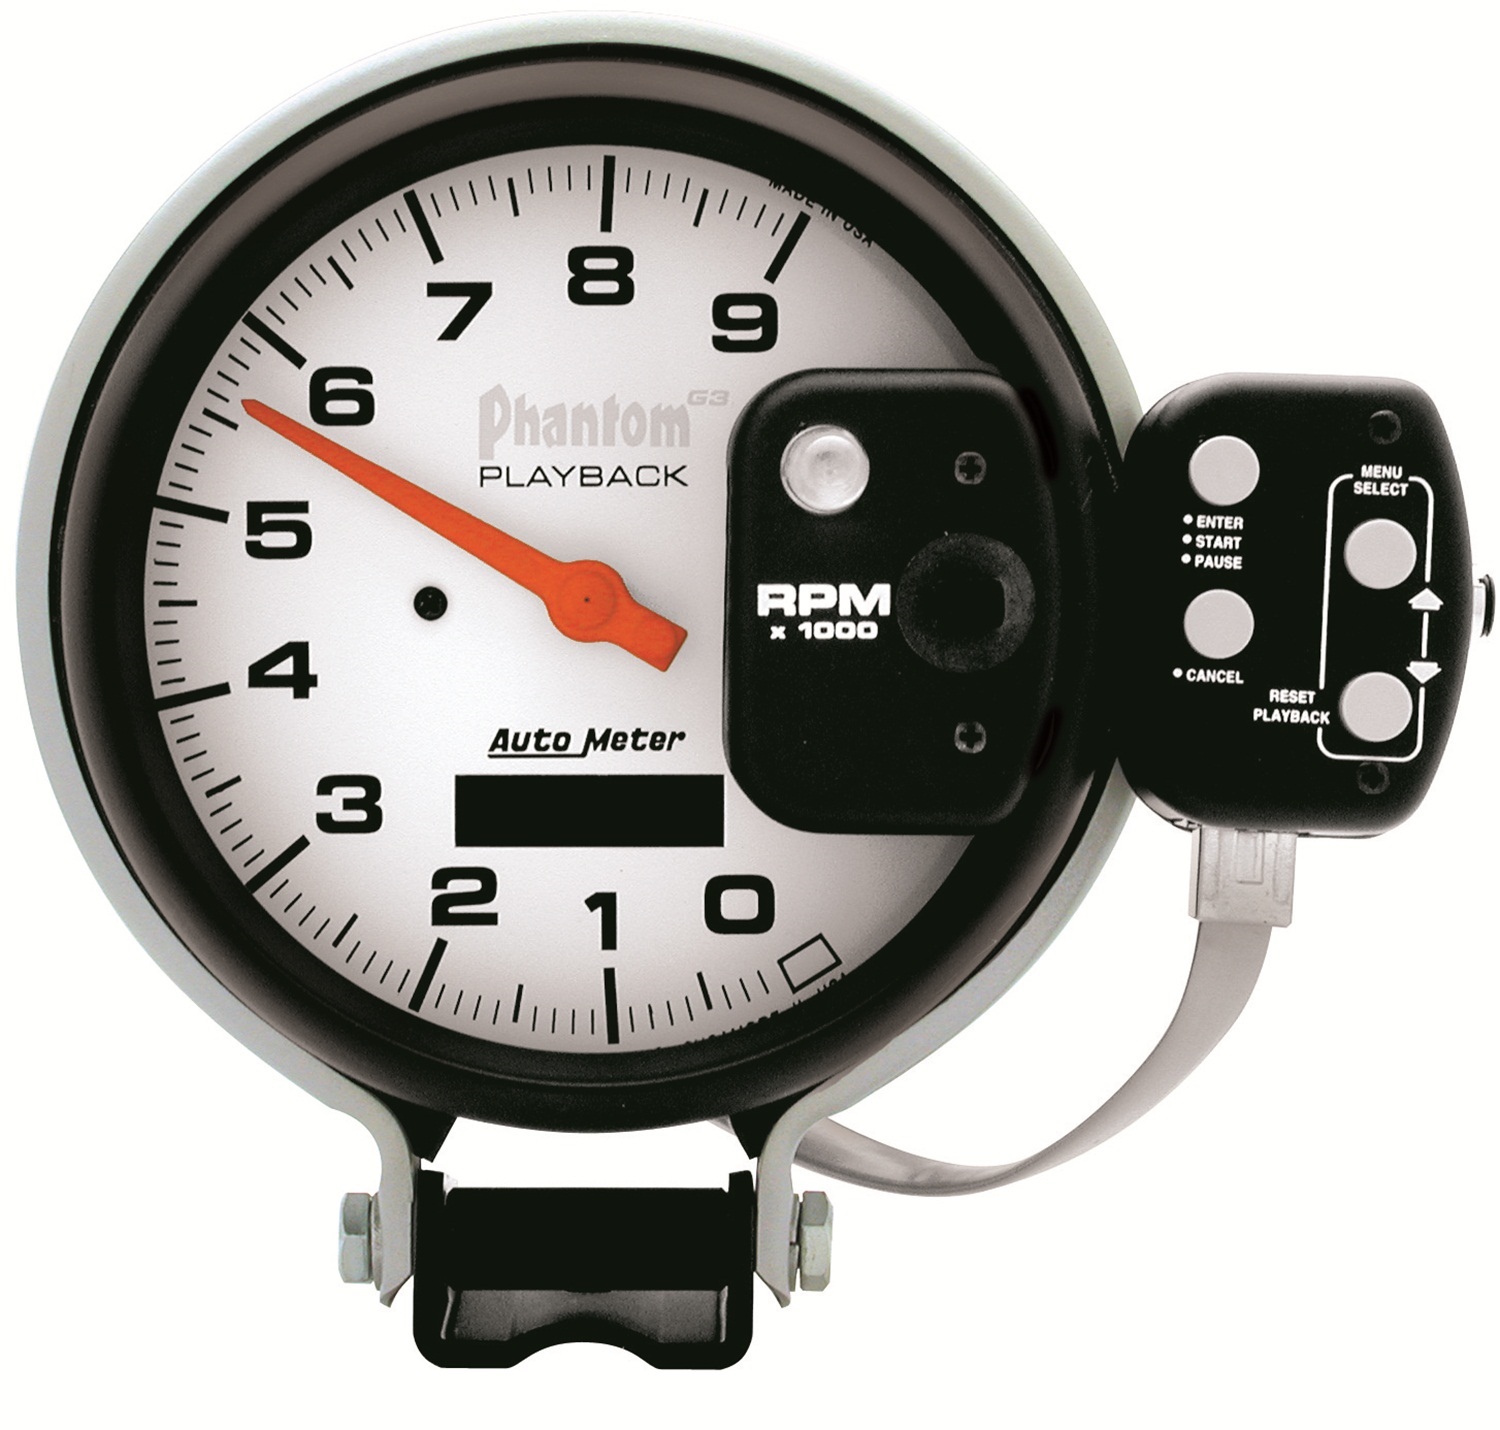 Auto Meter Auto Meter 5798 Phantom; Playback Single Range Tachometer